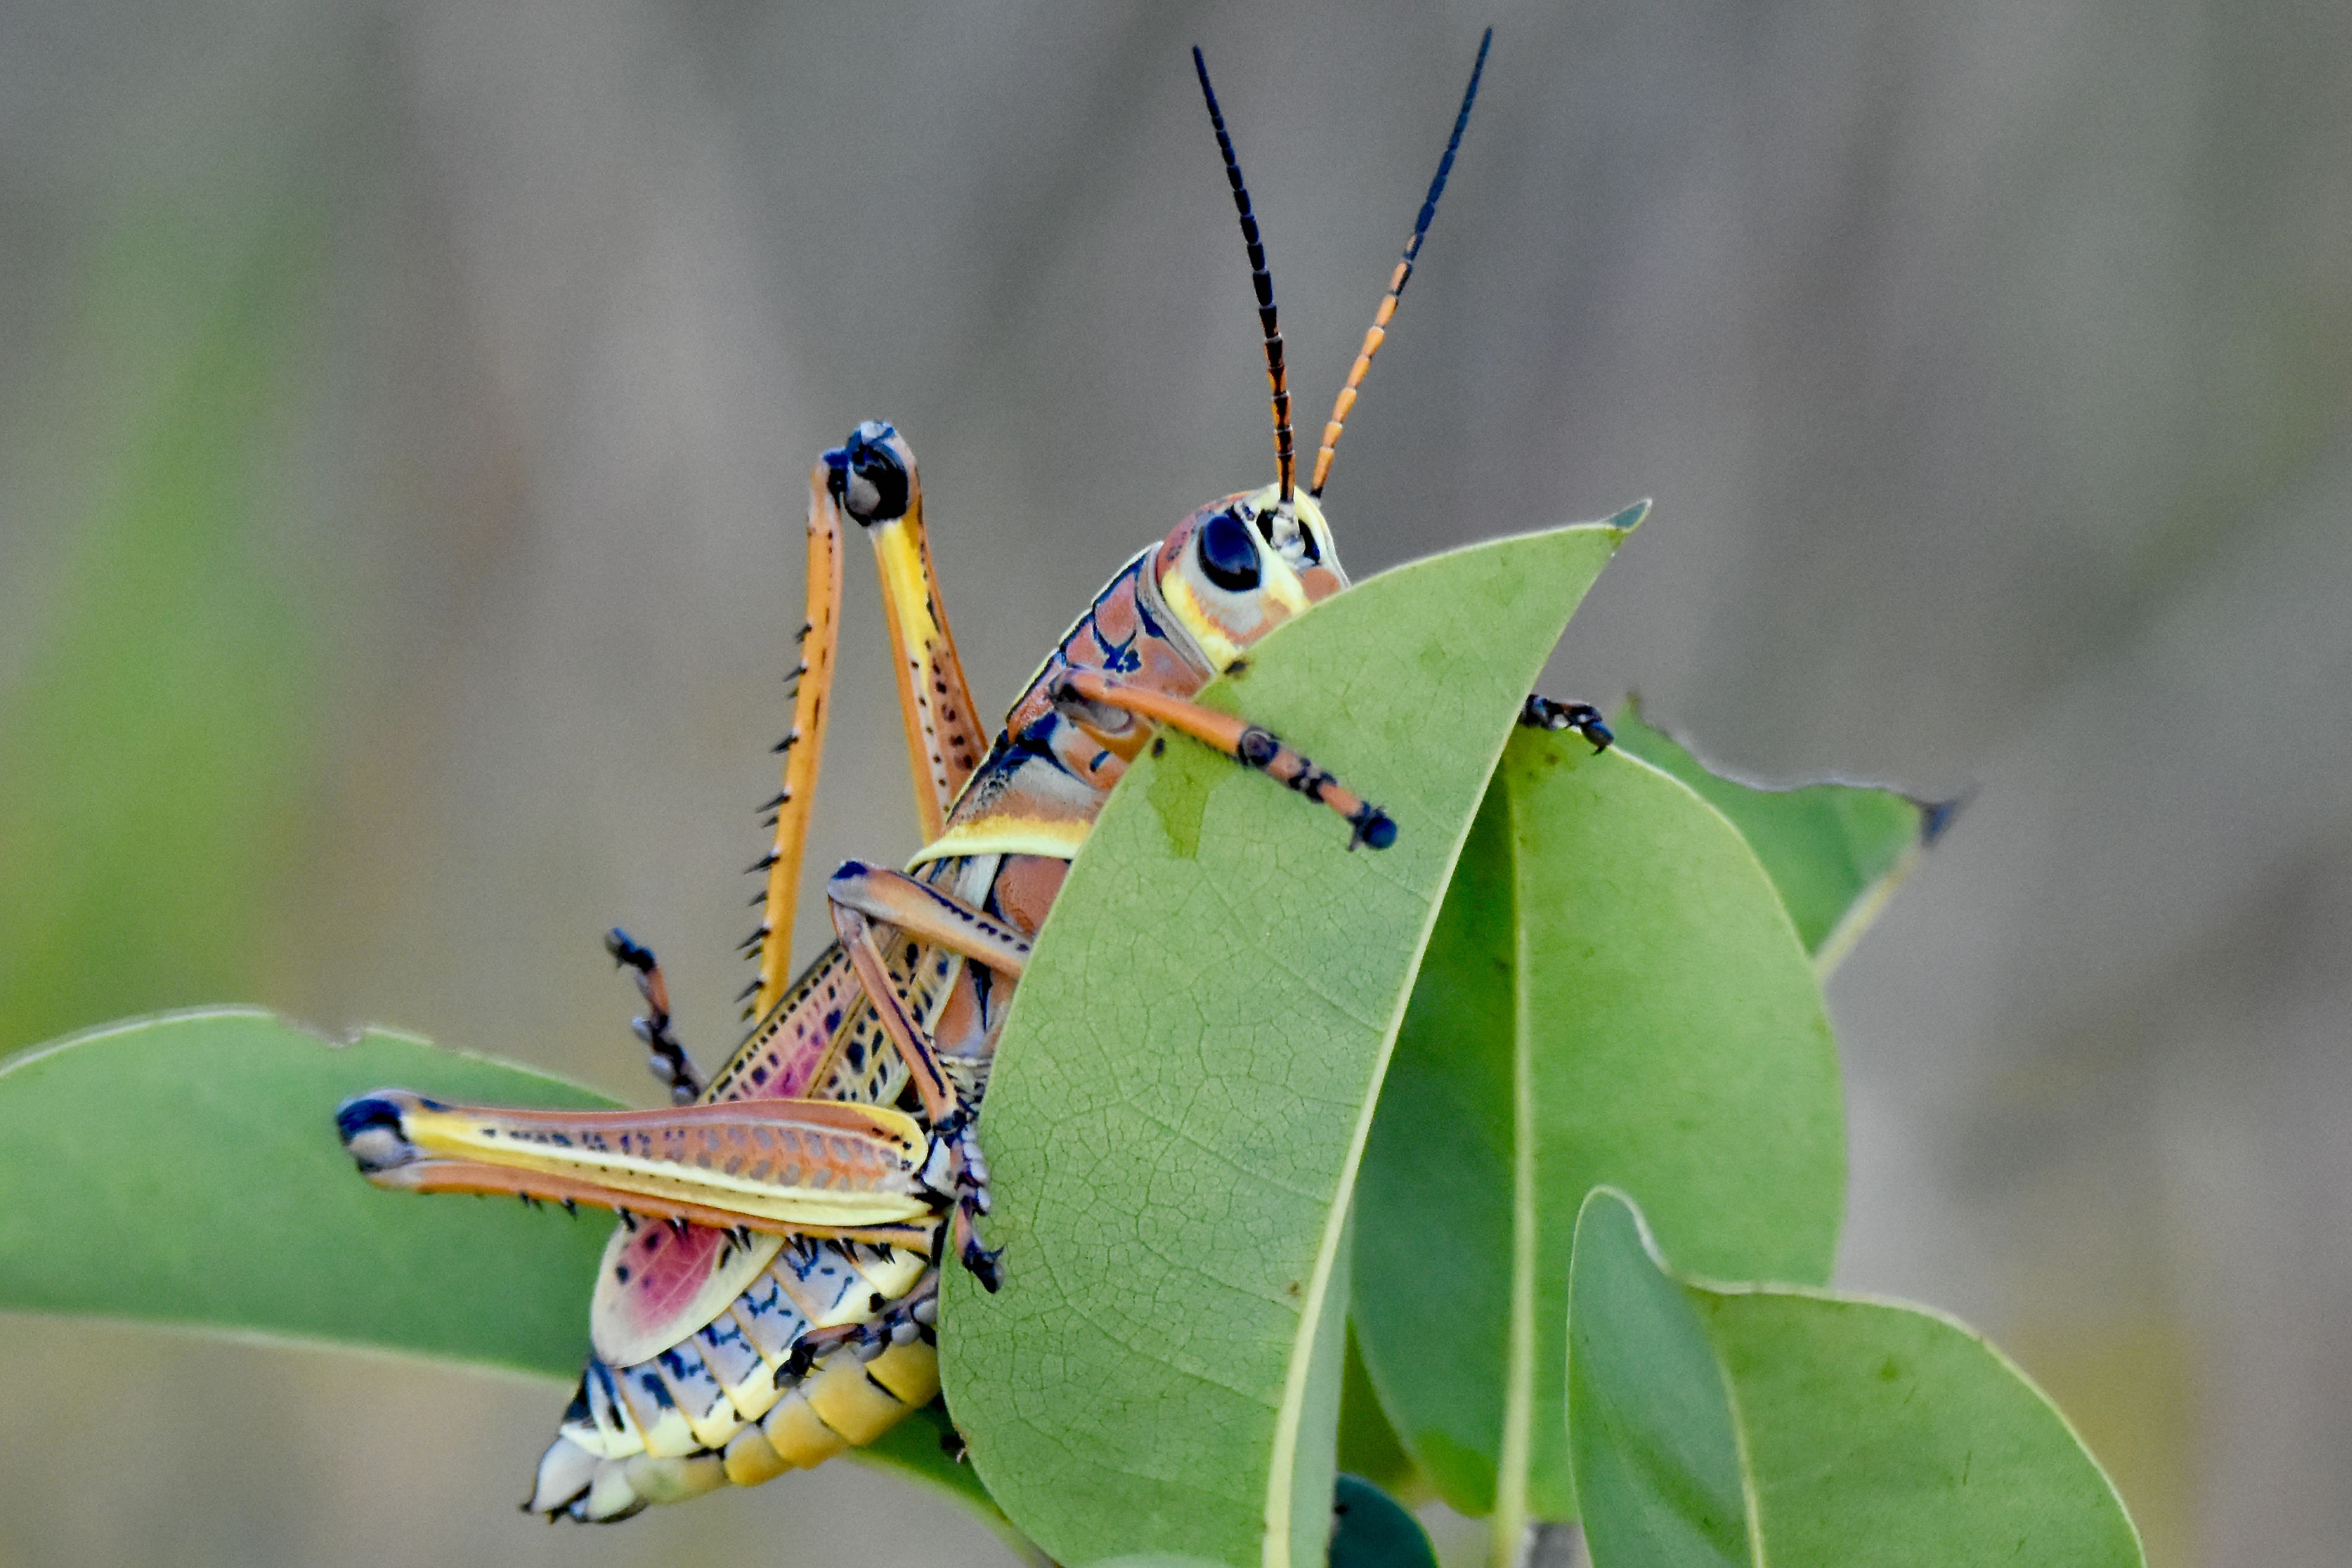 lubber grasshopper